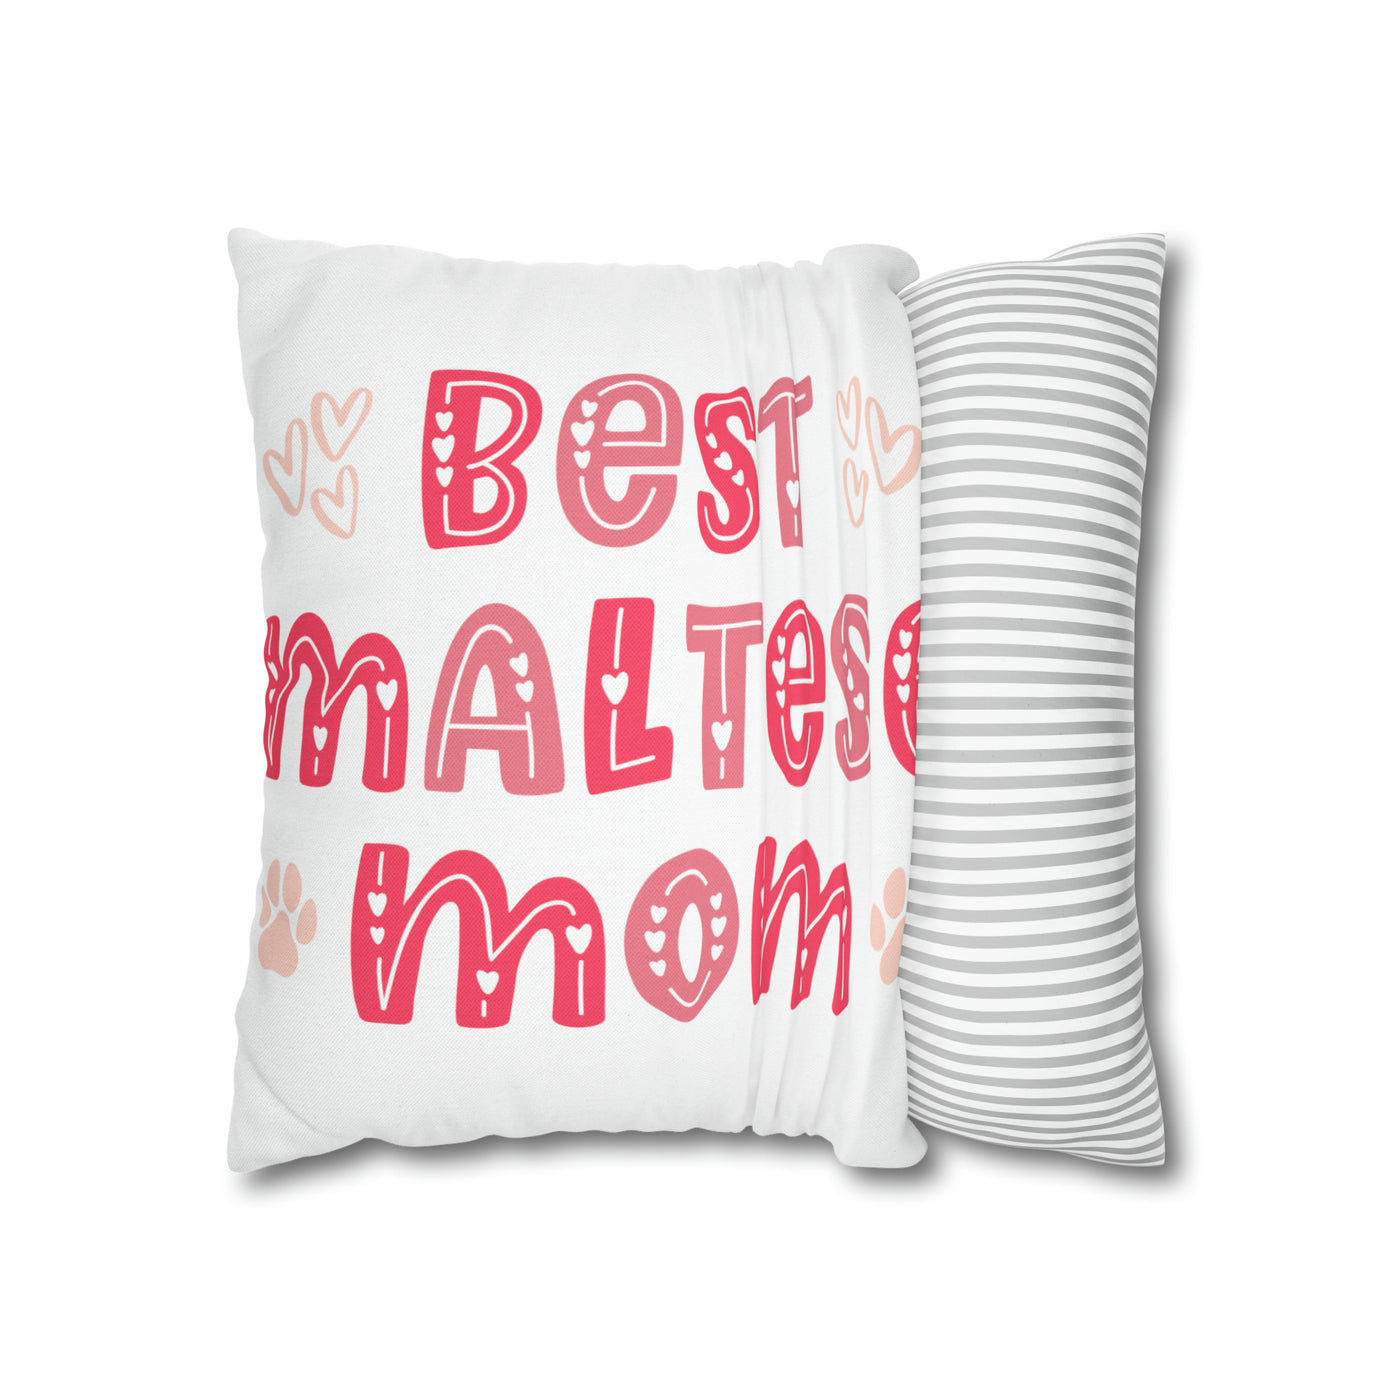 Best Maltese Mom Colored Print Square Pillow Case